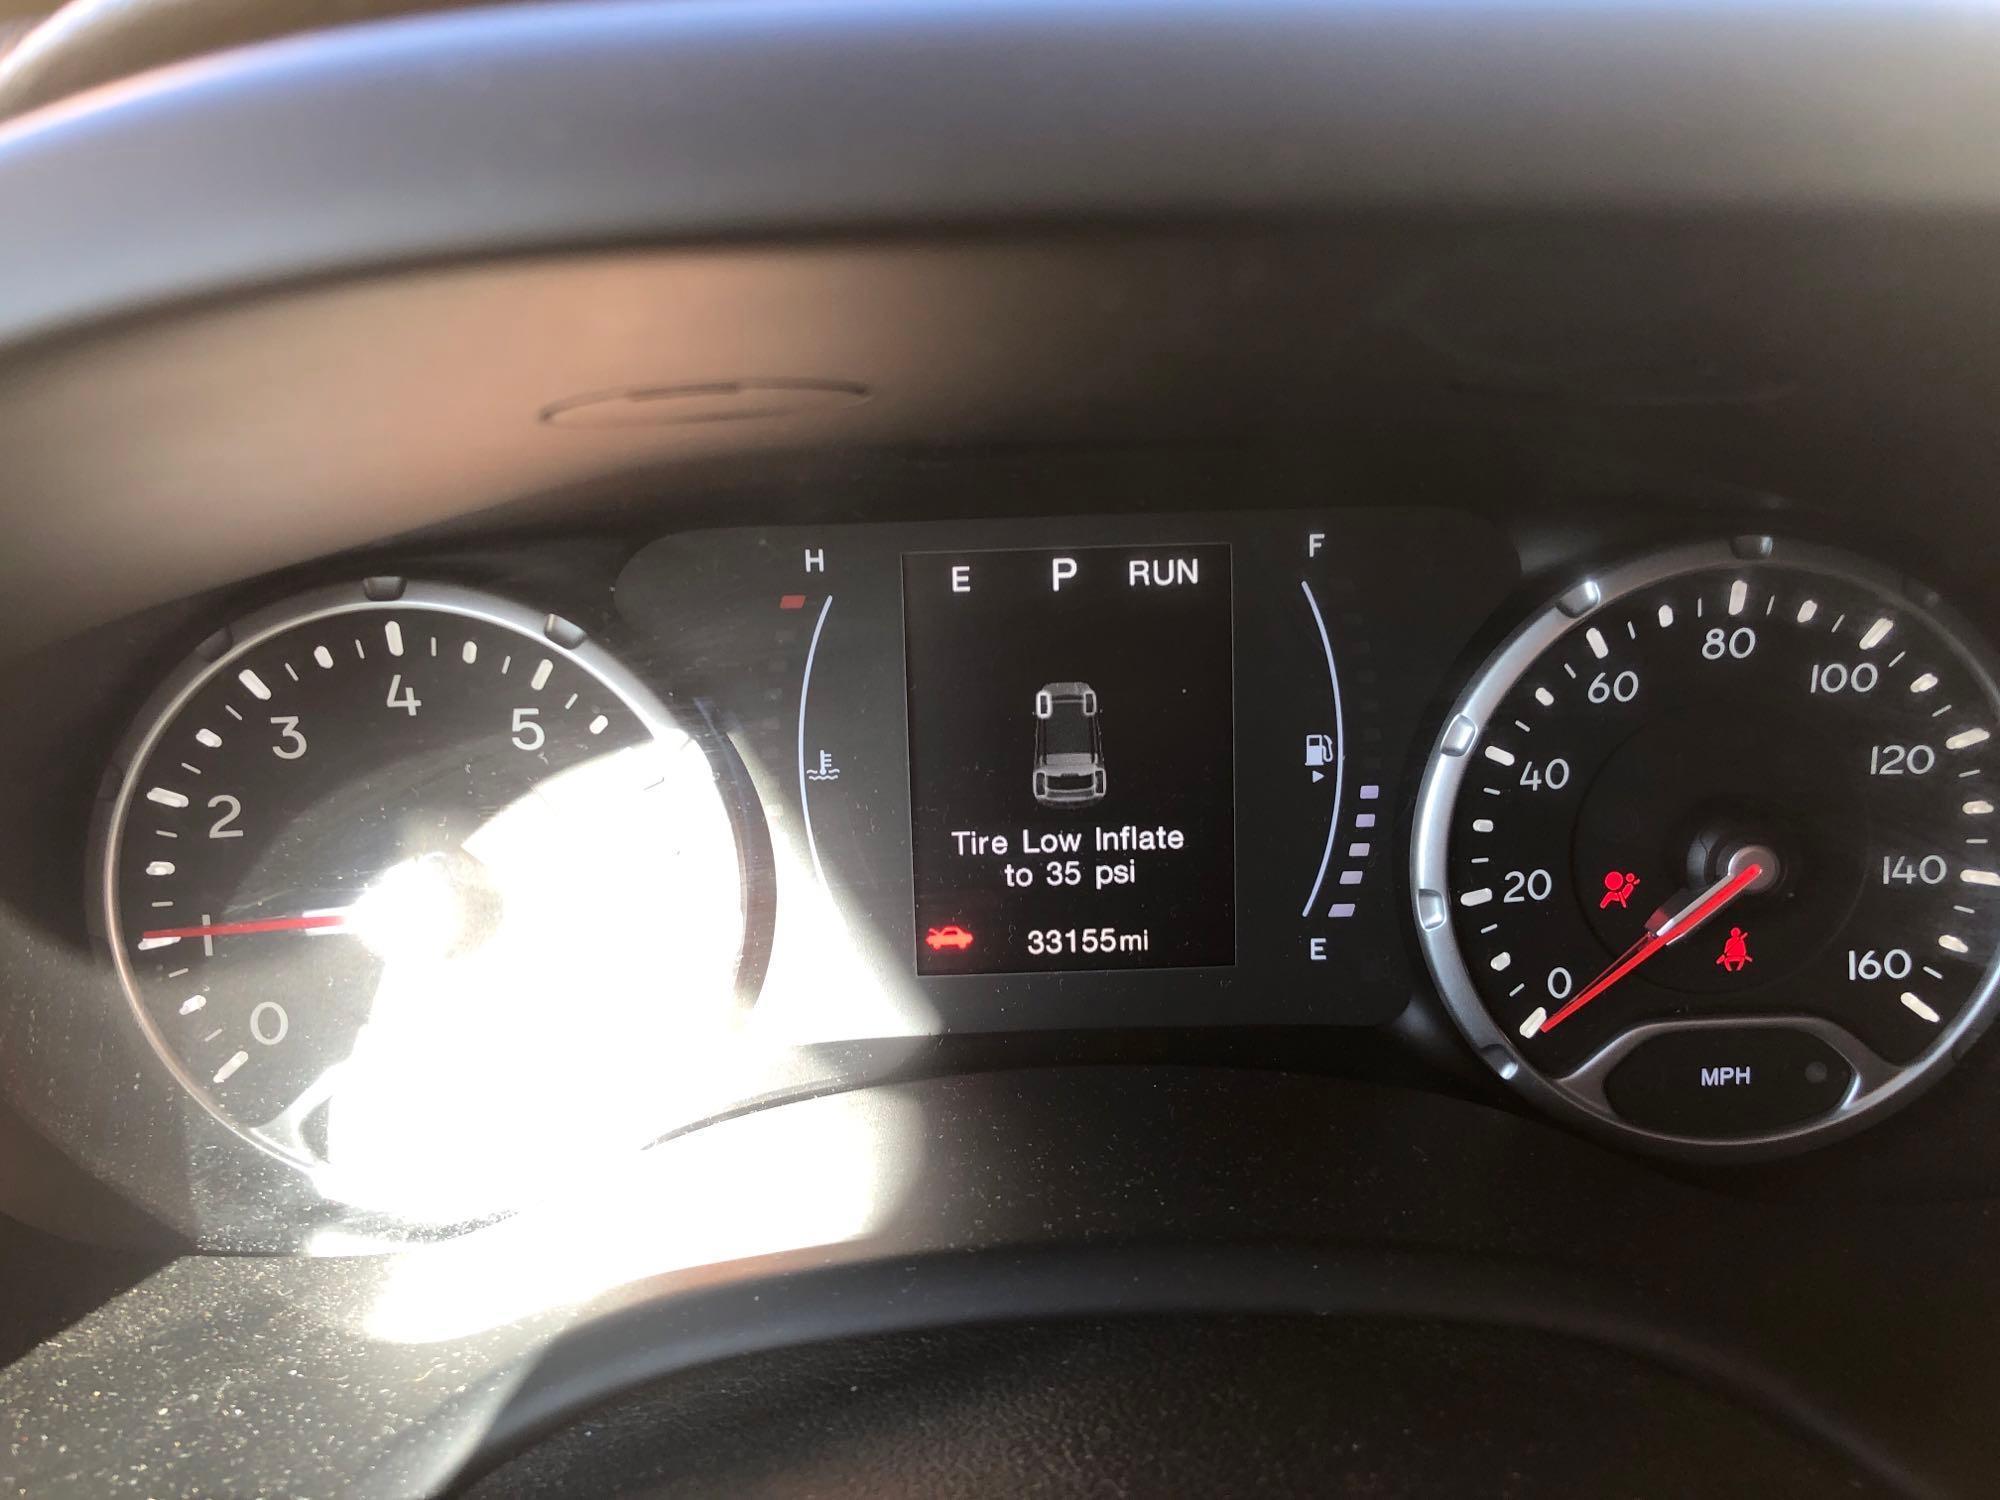 2017 Jeep Renegade. 33,155 miles. Runs. needs a new battery